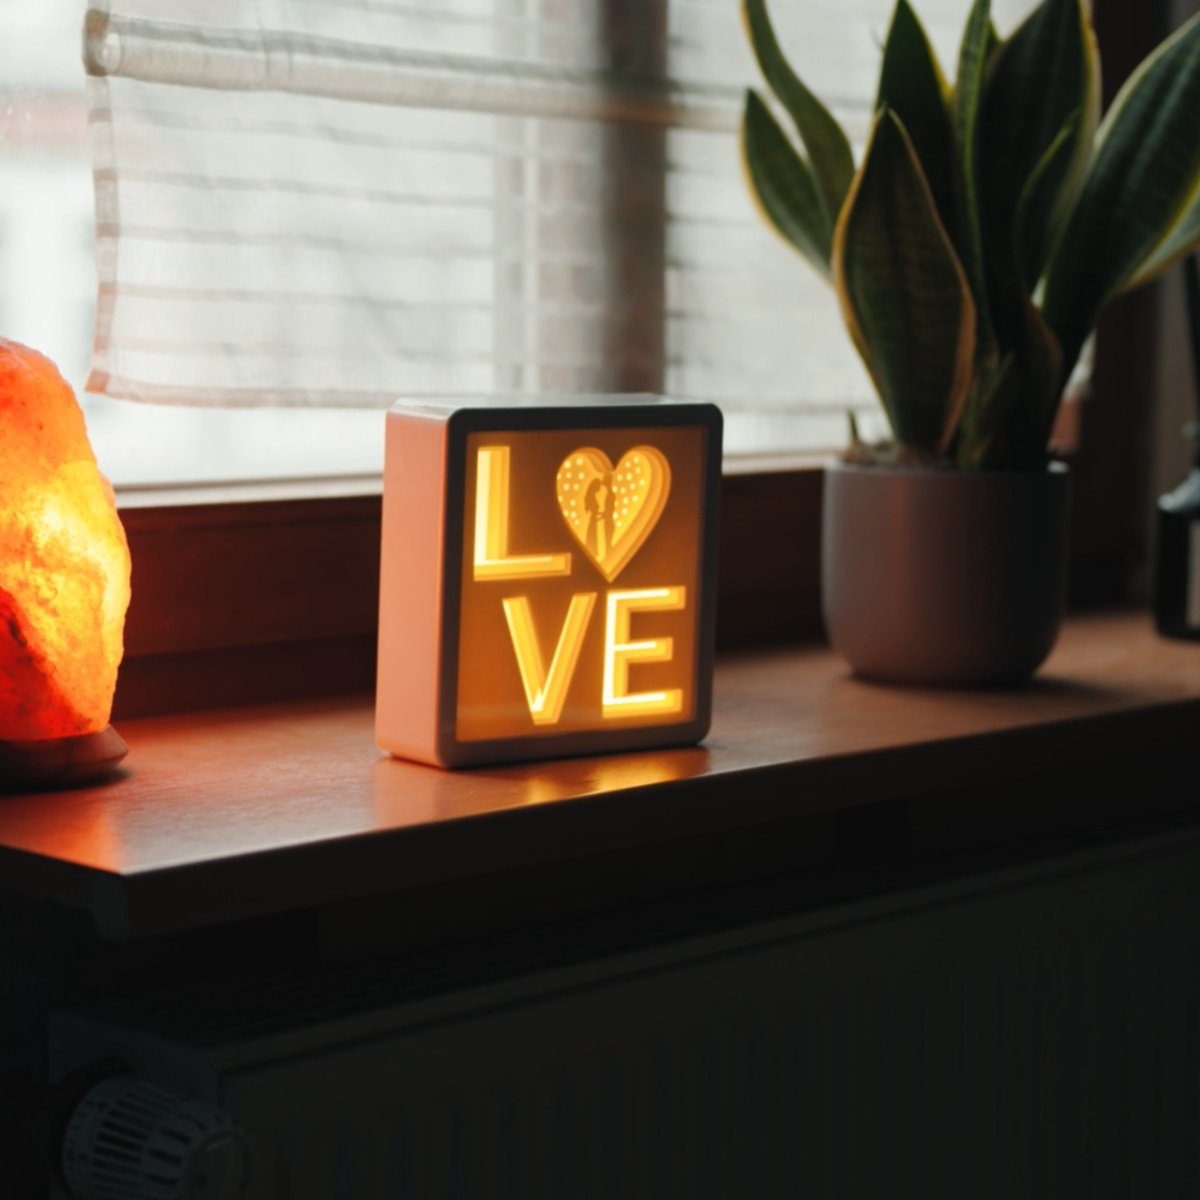 fest Love, CiM SQUARE - 16x5x16cm, LED integriert, LED Lichtbox Warmweiß, Nachtlicht, kabellose Dekoration 3D Papercut Shadowbox, Wohnaccessoire,